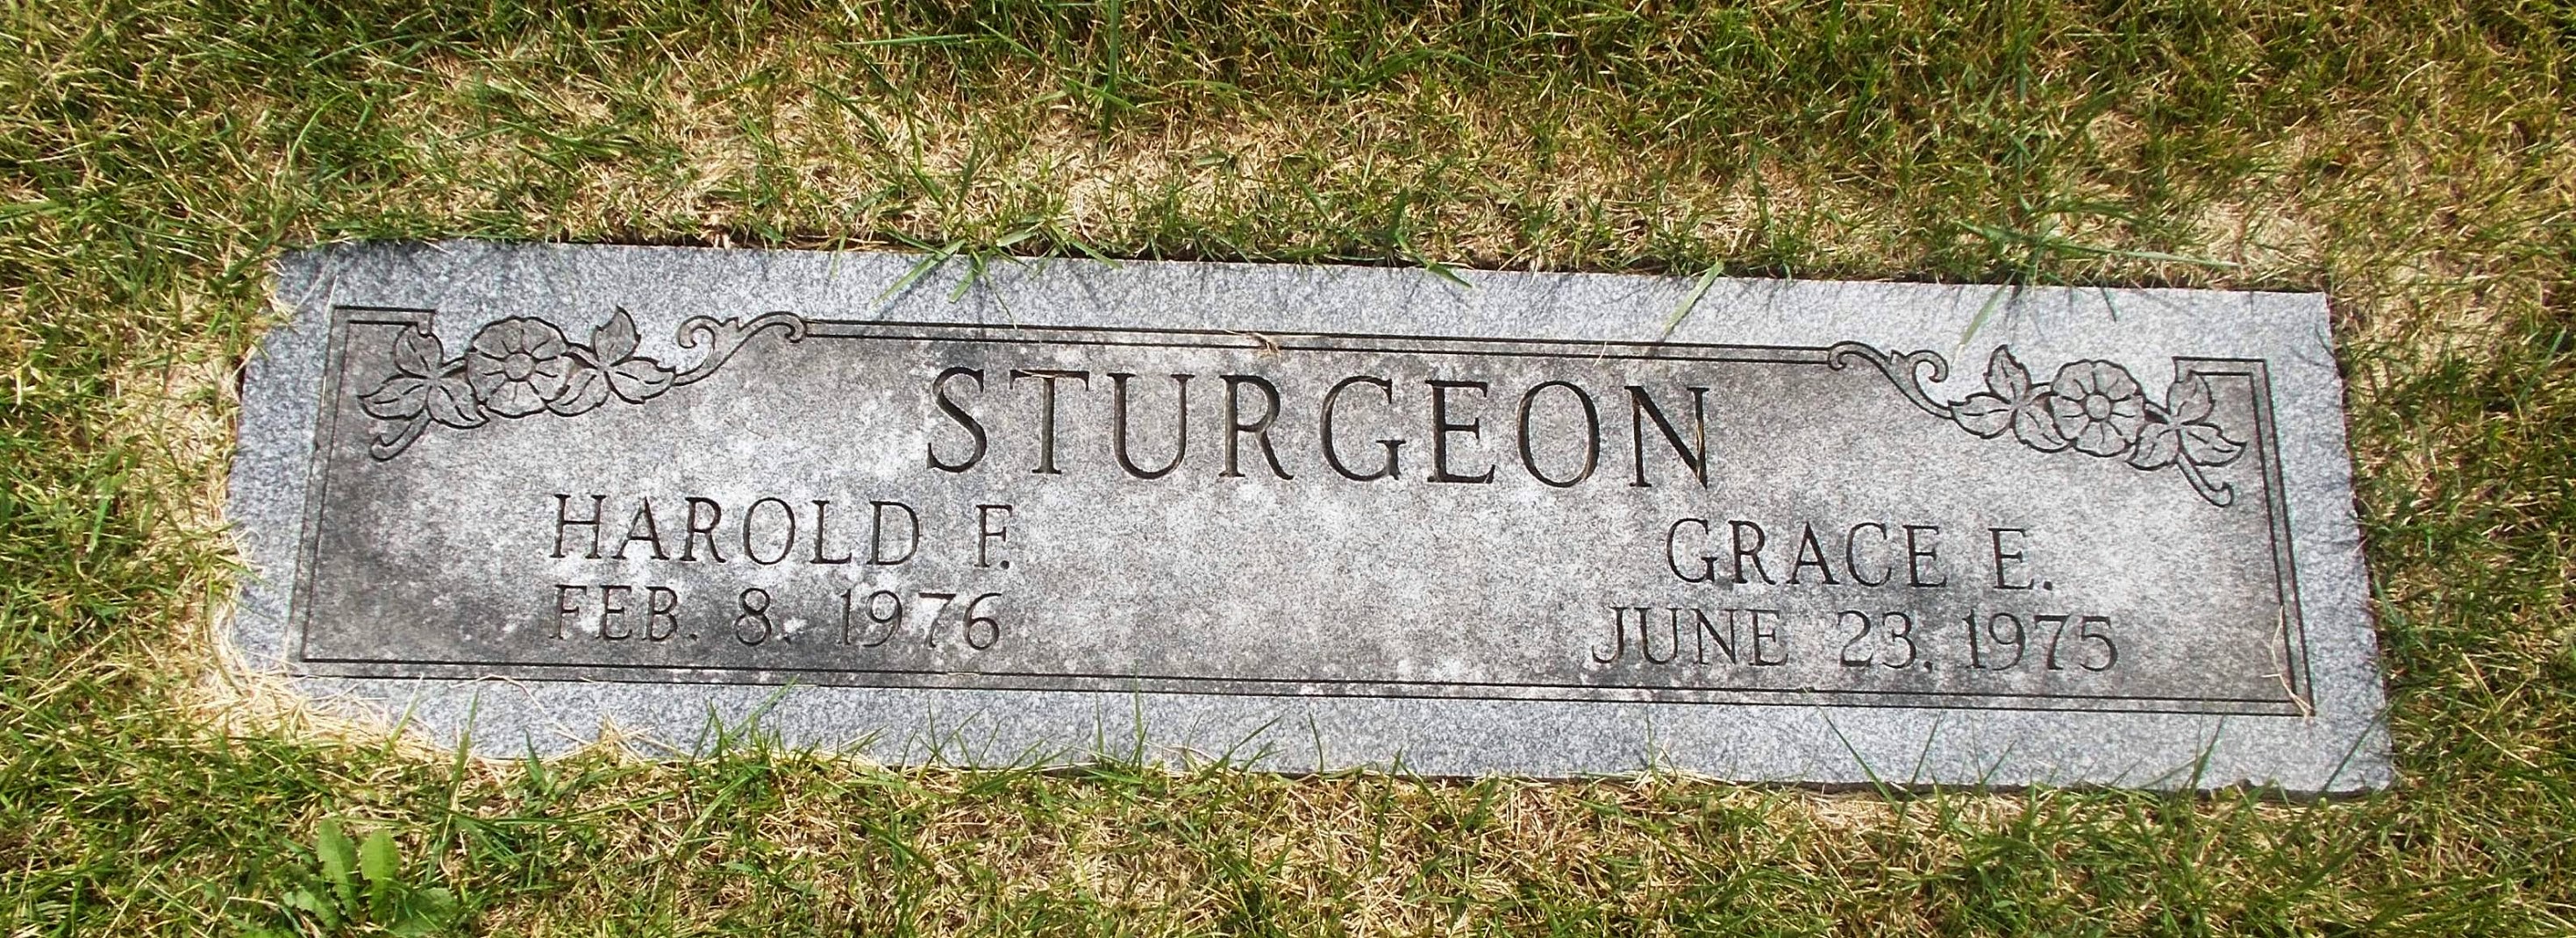 Grace E Sturgeon